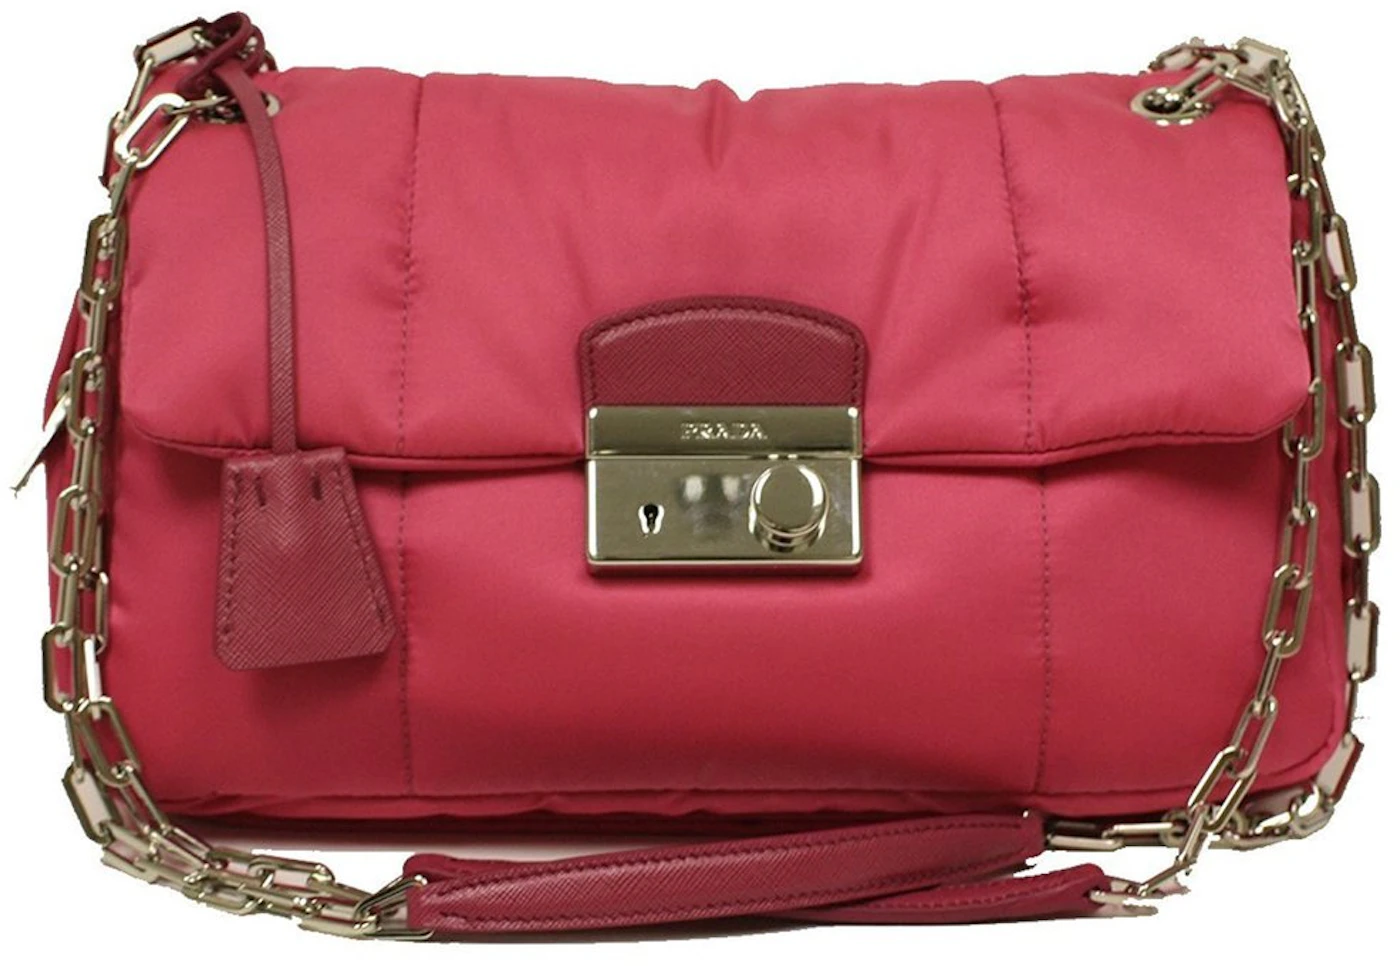 Prada Pink Leather Pattina Shoulder Bag